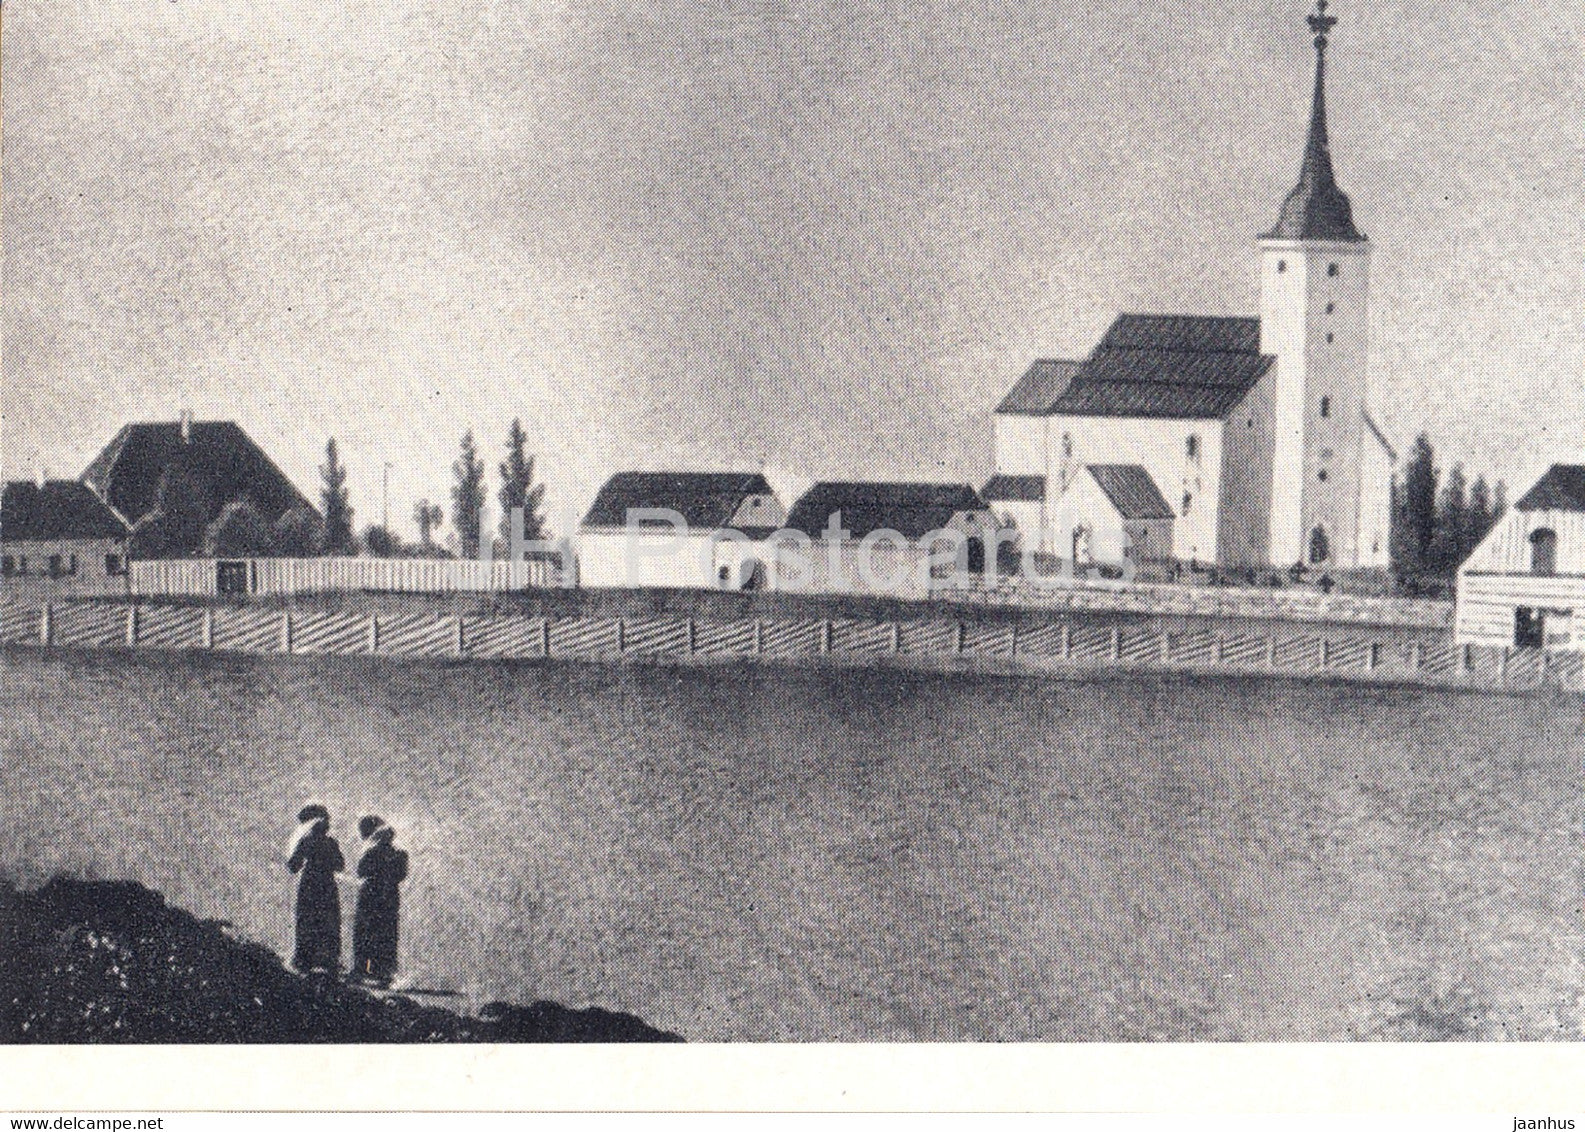 Koeru - Chapel of the Baer family - church - 1976 - Estonia USSR - unused - JH Postcards